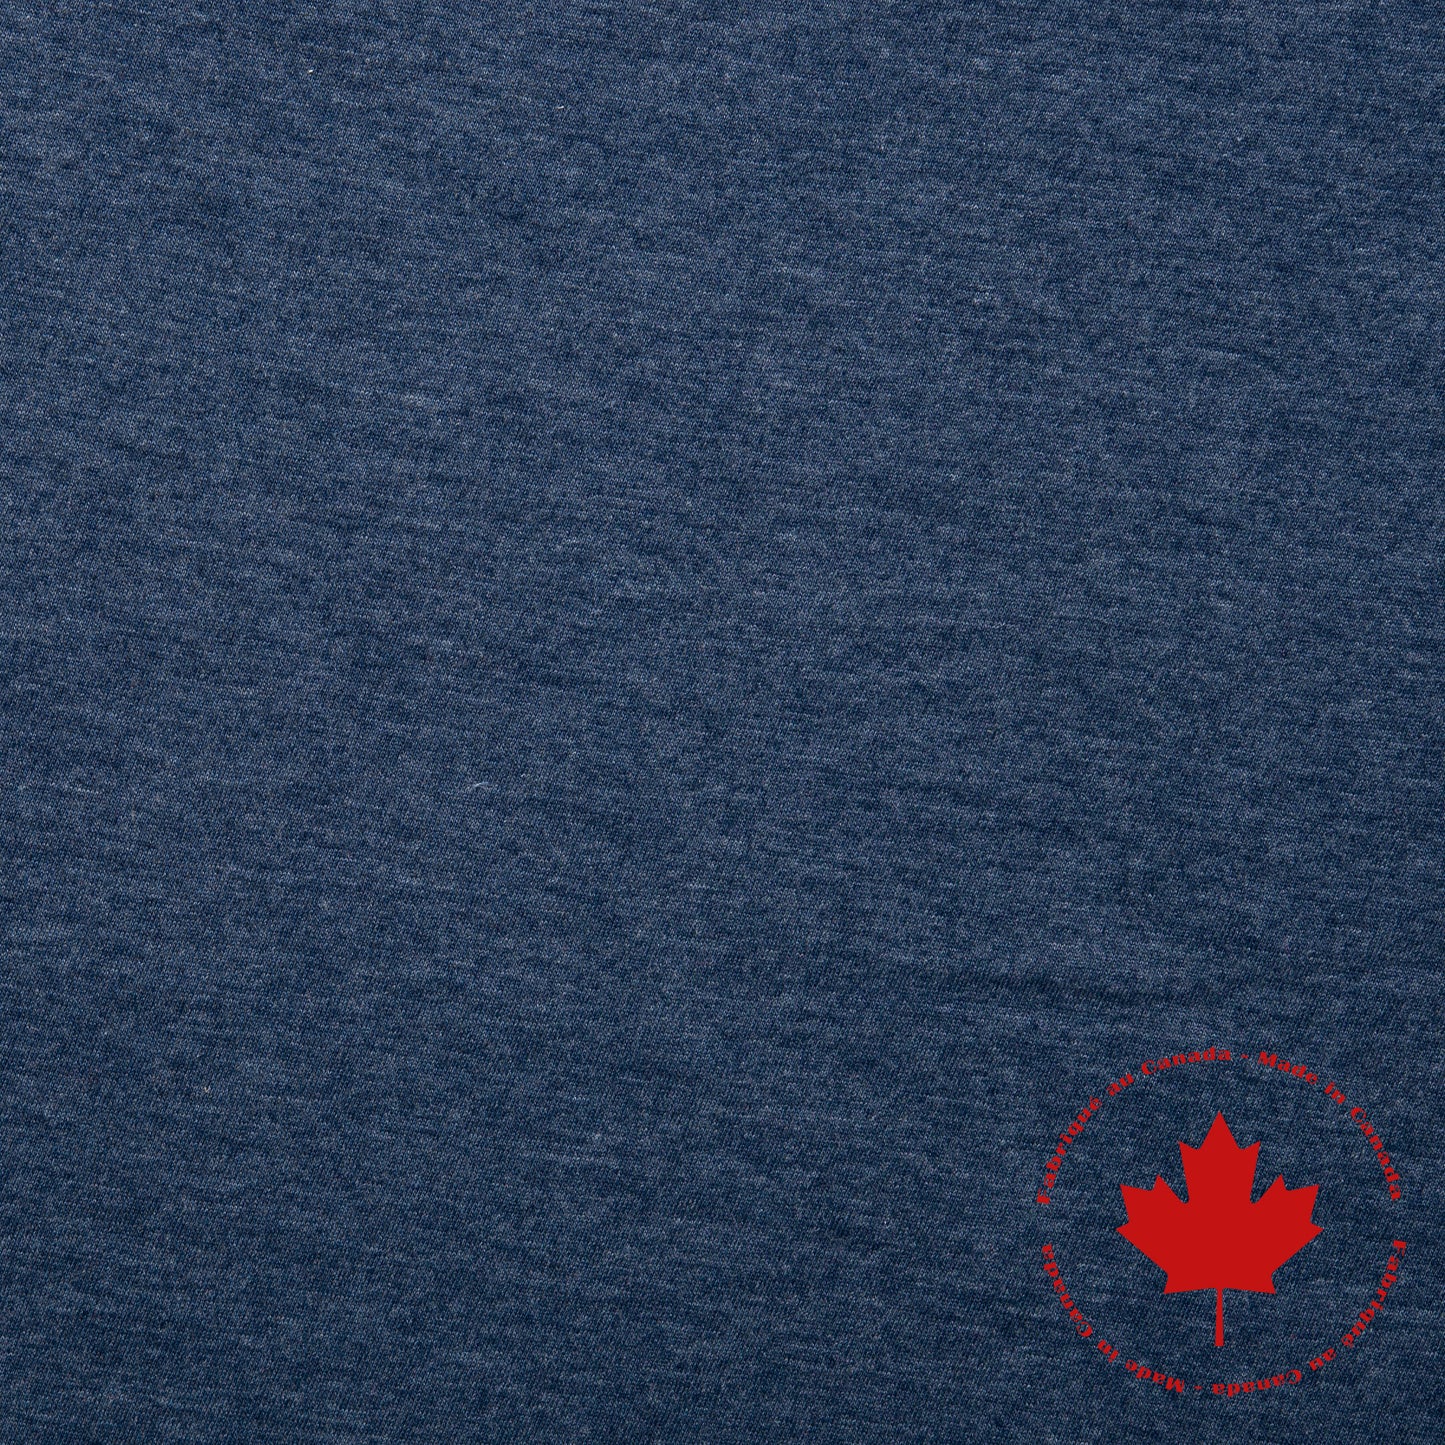 Tricot jersey - Canadien - Bleu mixte